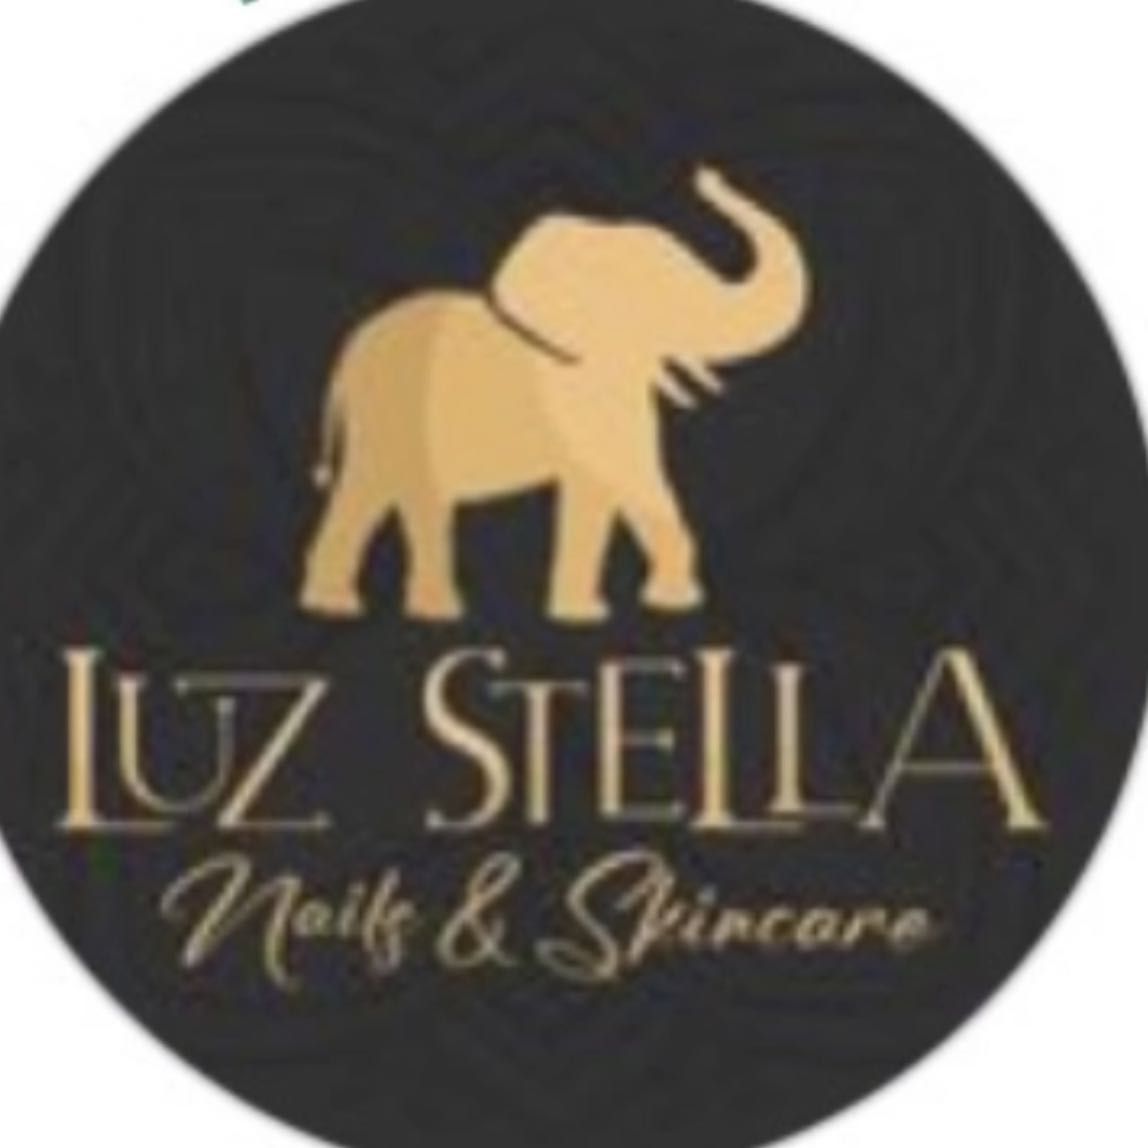 Nails & Skincare By Luz Stella, 6327 Osprey Lake Cir, Gate 397#, Riverview, 33578